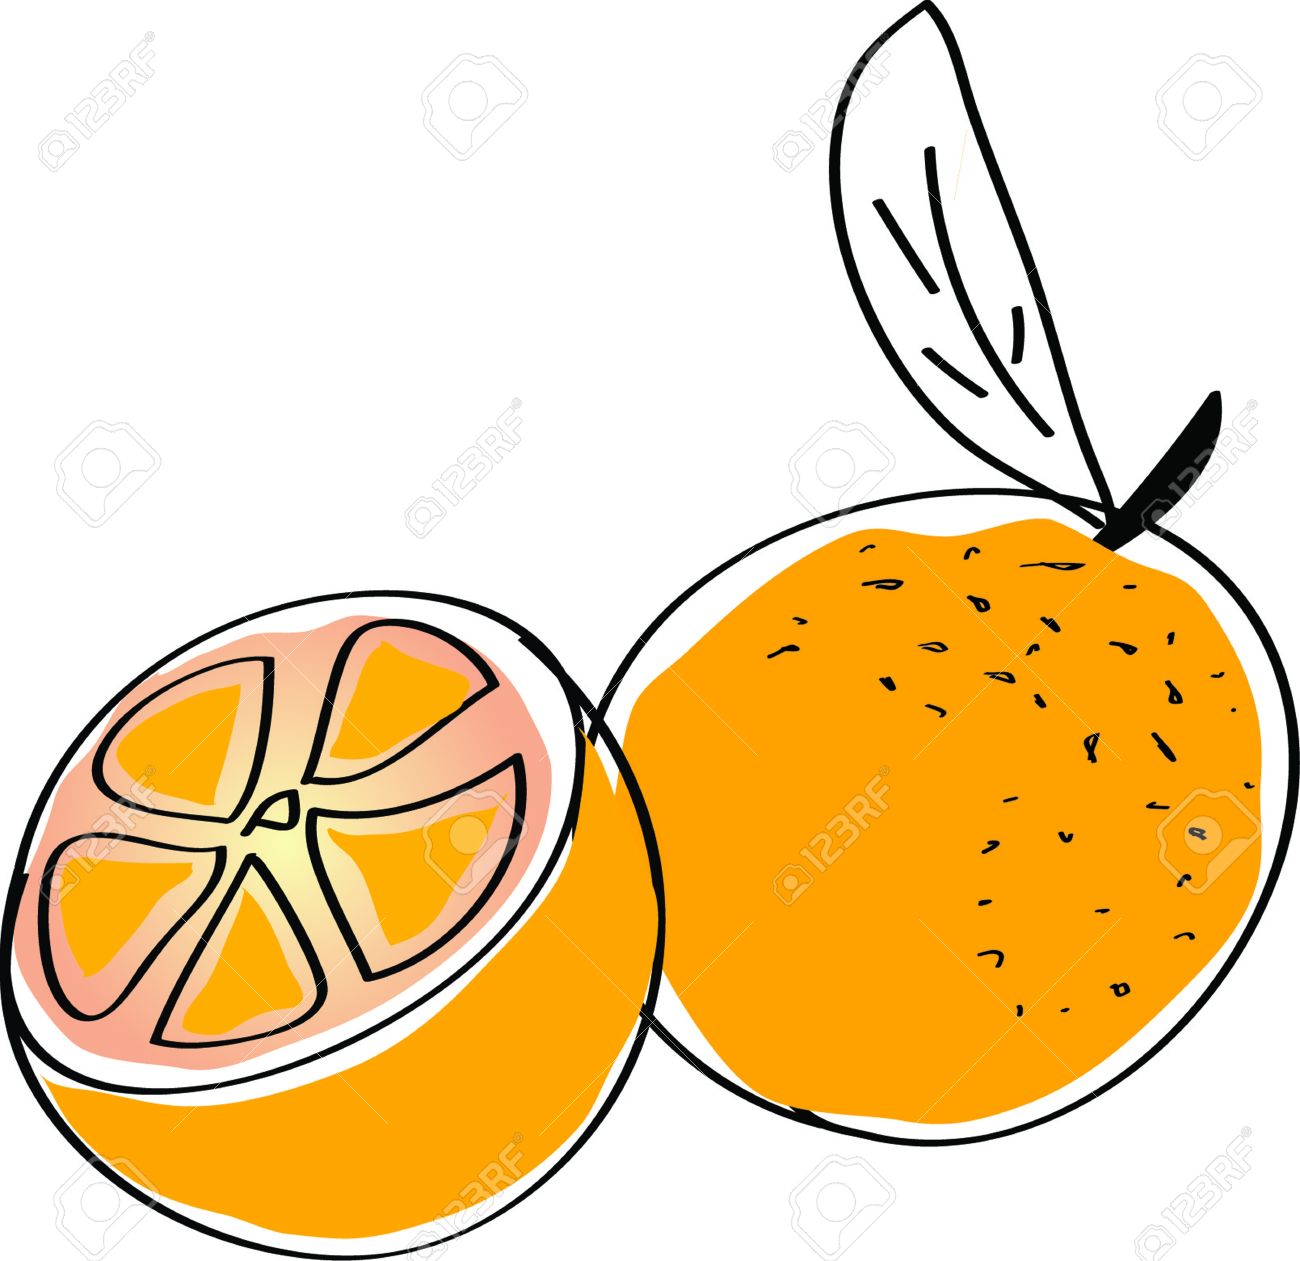 Эскиз апельсина документ